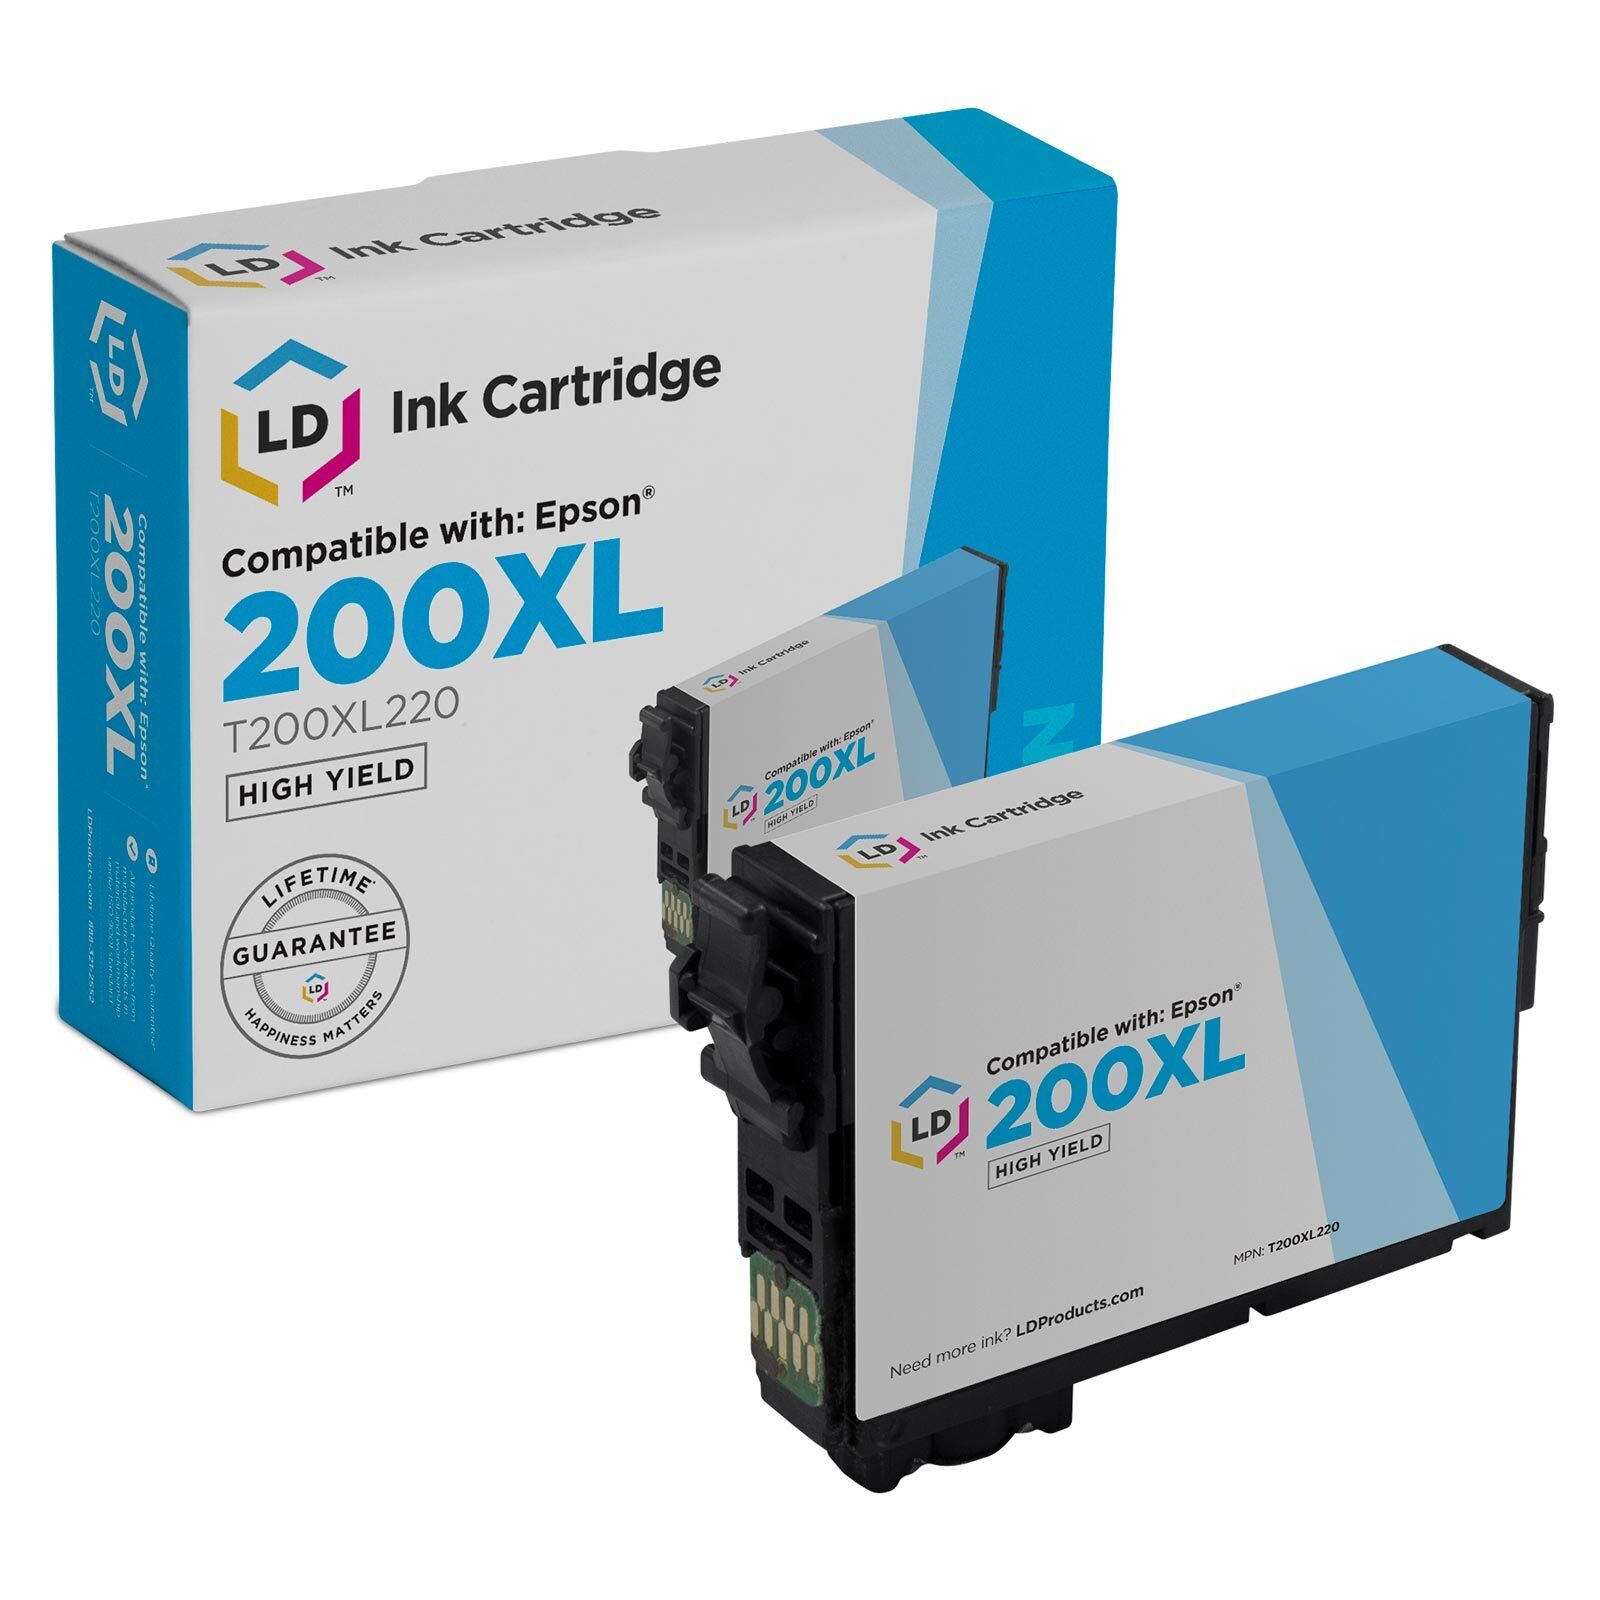 LD T200XL220 200XL Cyan Ink Cartridge for Epson XP-400 XP-200 WF-2520 WF-2530